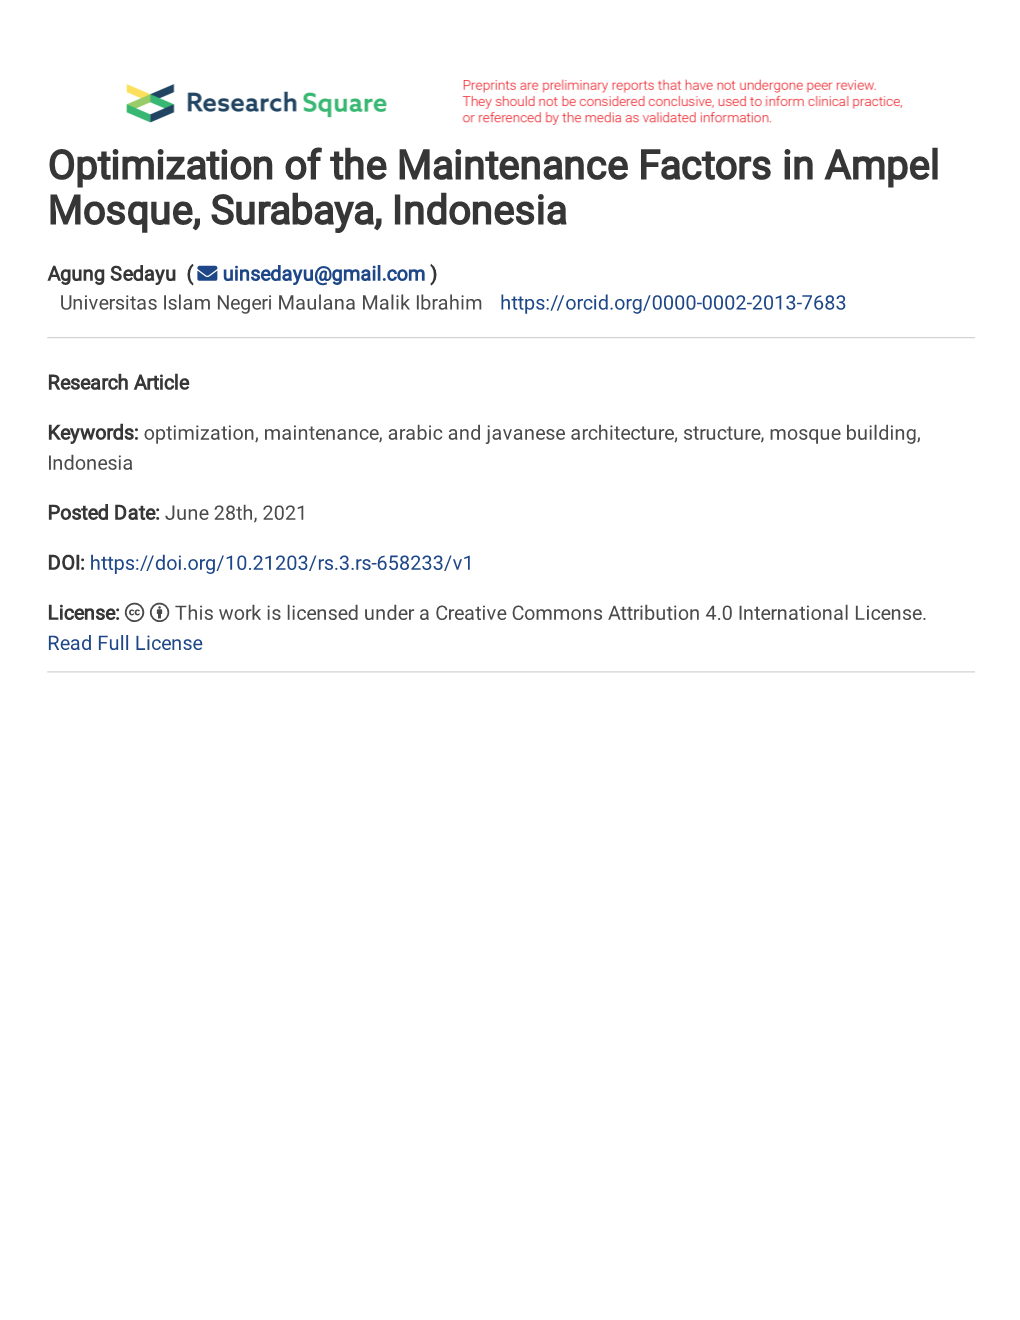 Optimization of the Maintenance Factors in Ampel Mosque, Surabaya, Indonesia